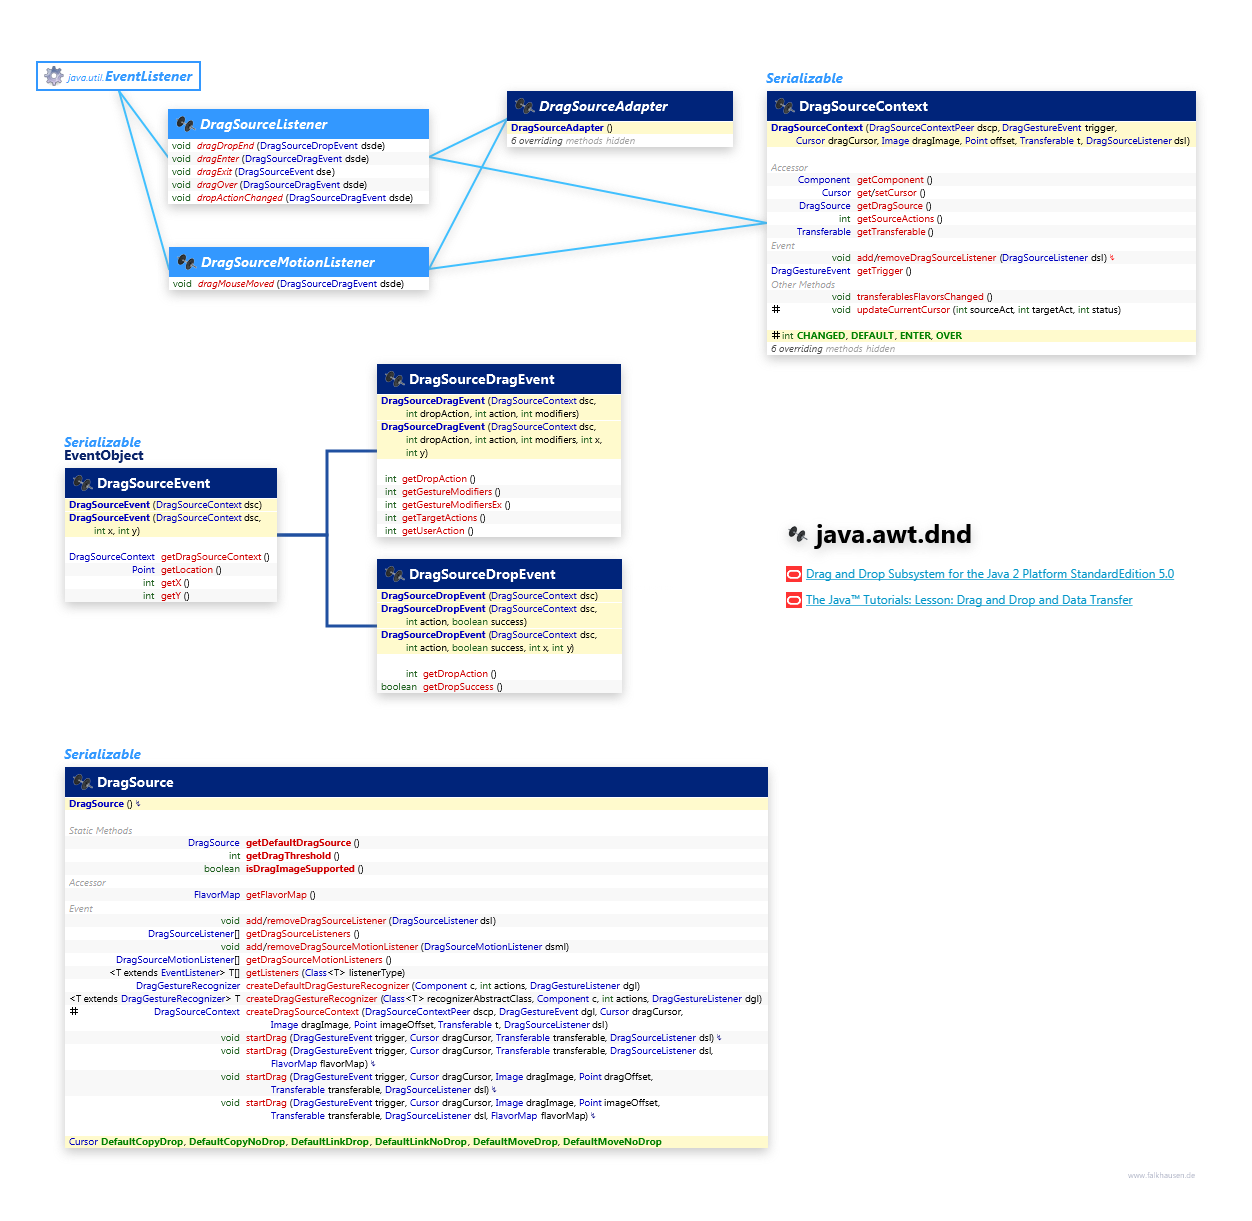 java.awt.dnd DragSource class diagram and api documentation for Java 7